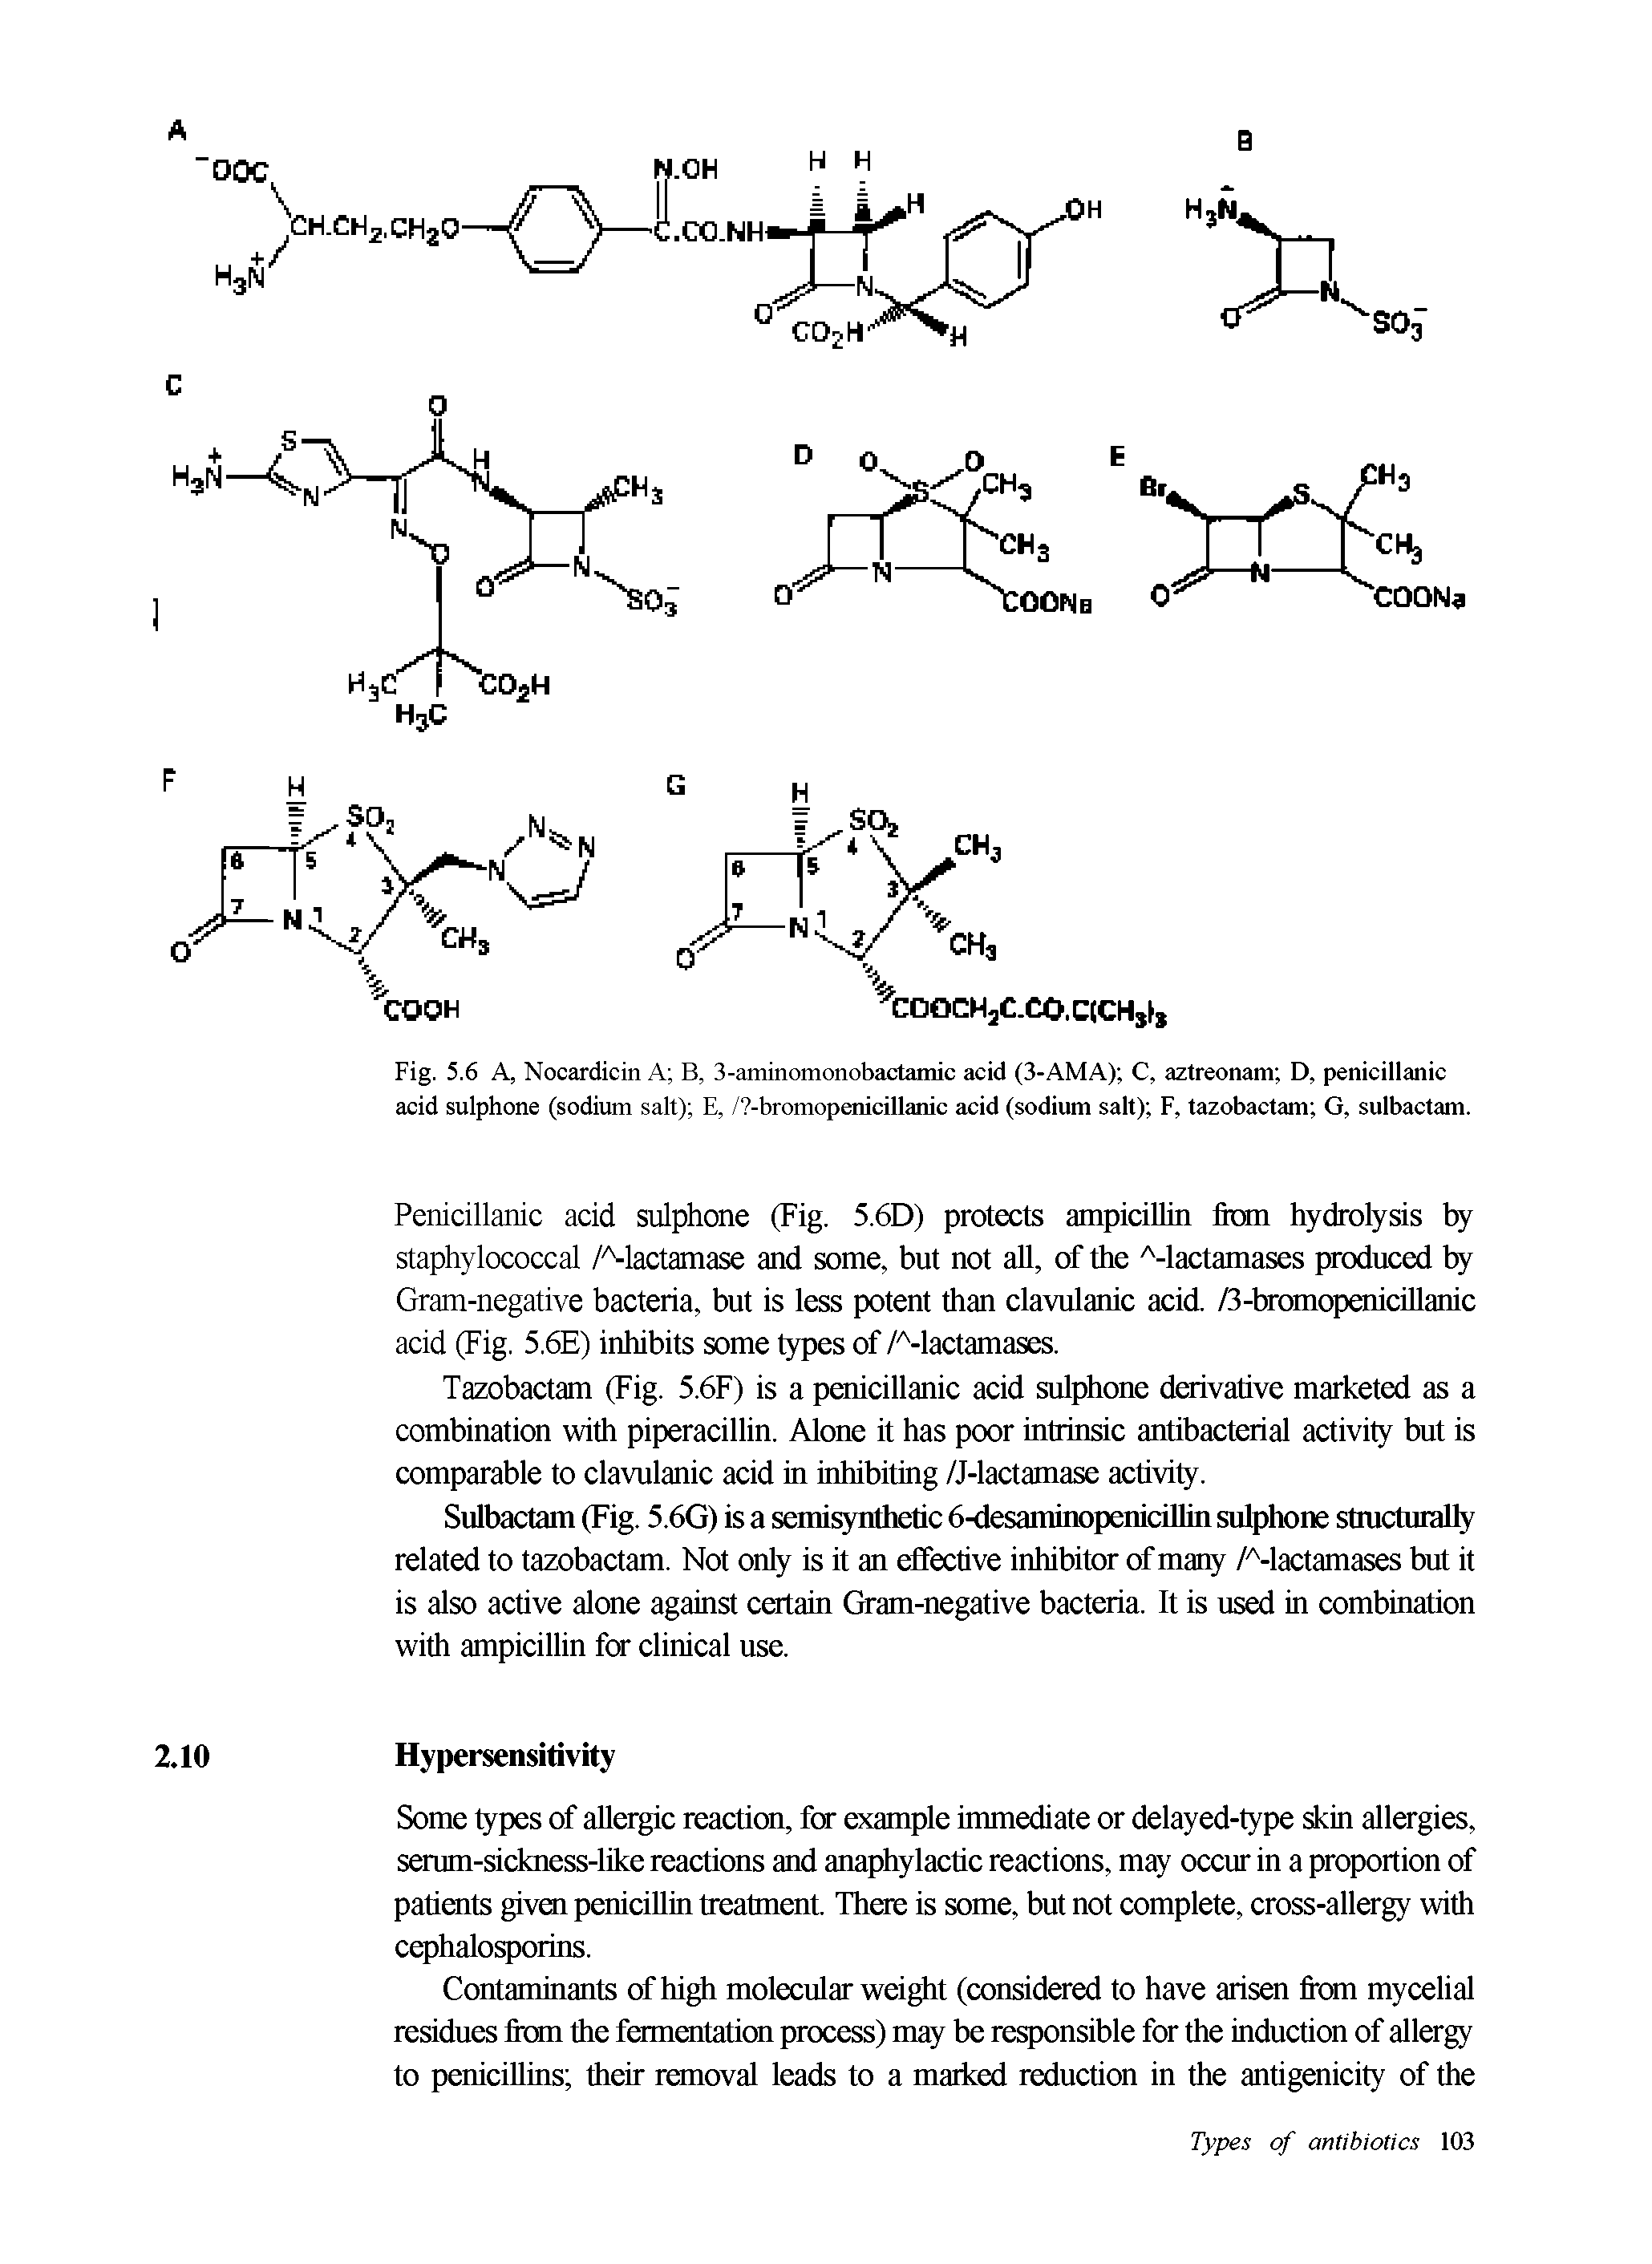 Fig. 5.6 A, Nocardicin A B, 3-aminomonobactamic acid (3-AMA) C, aztreonam D, penicillanic acid sulphone (sodium salt) E, / -bromopenicillamc acid (sodium salt) F, tazobactam G, sulbactam.